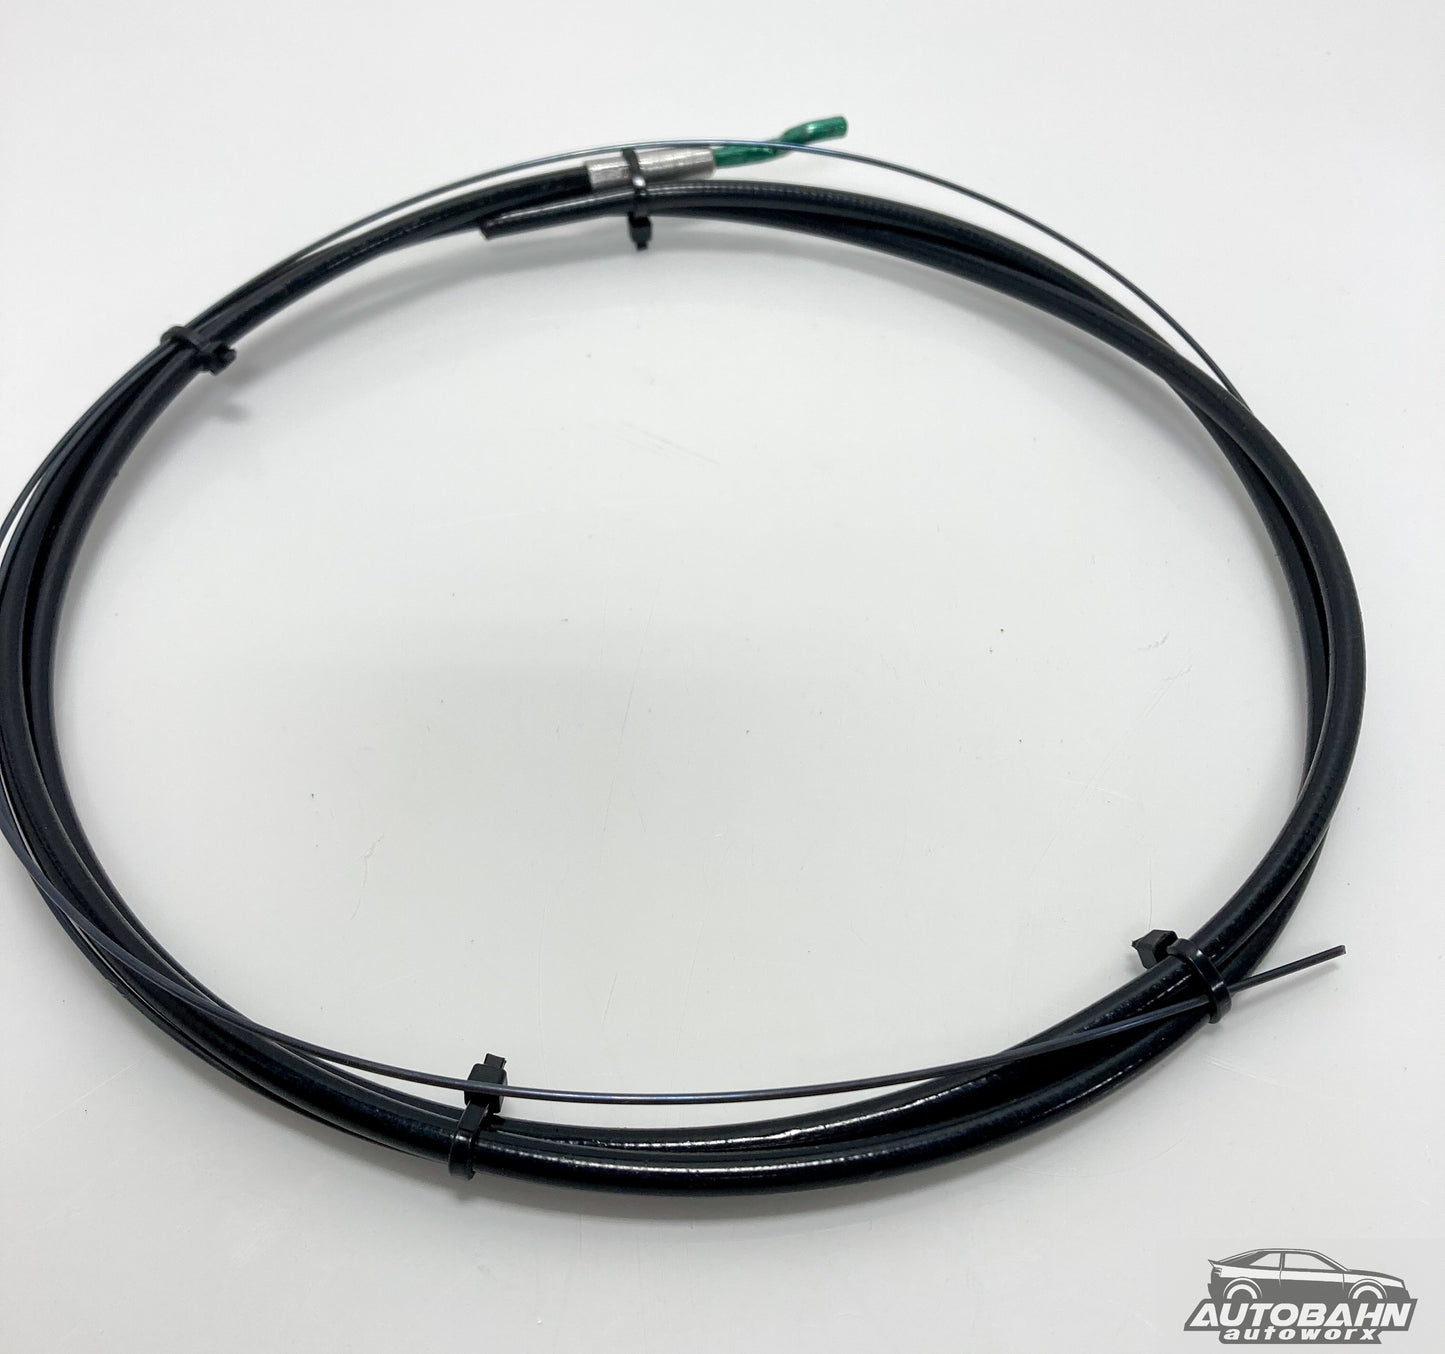 Autobahn Autoworx Vw Corrado Complete Hood Cable Setup